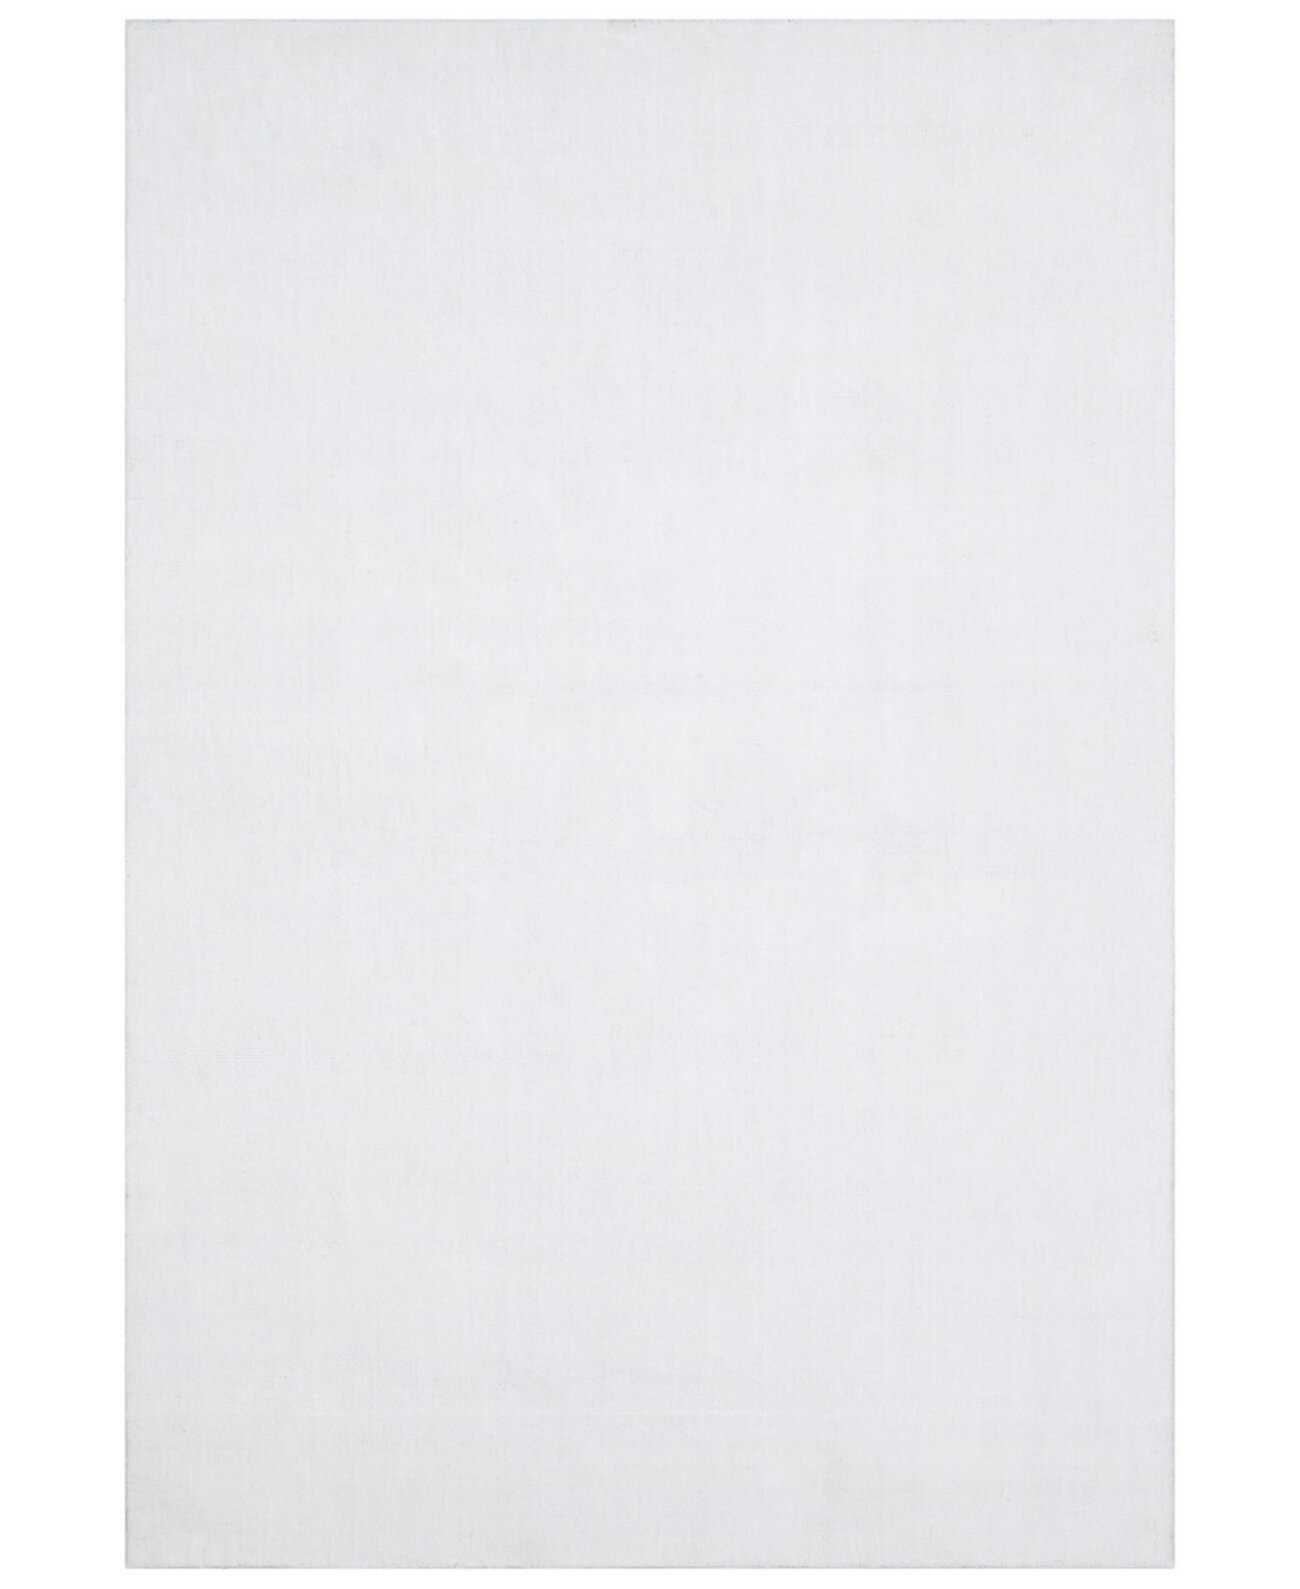 Wilkinson WLK-1000 Белый коврик размером 2 x 3 фута Surya